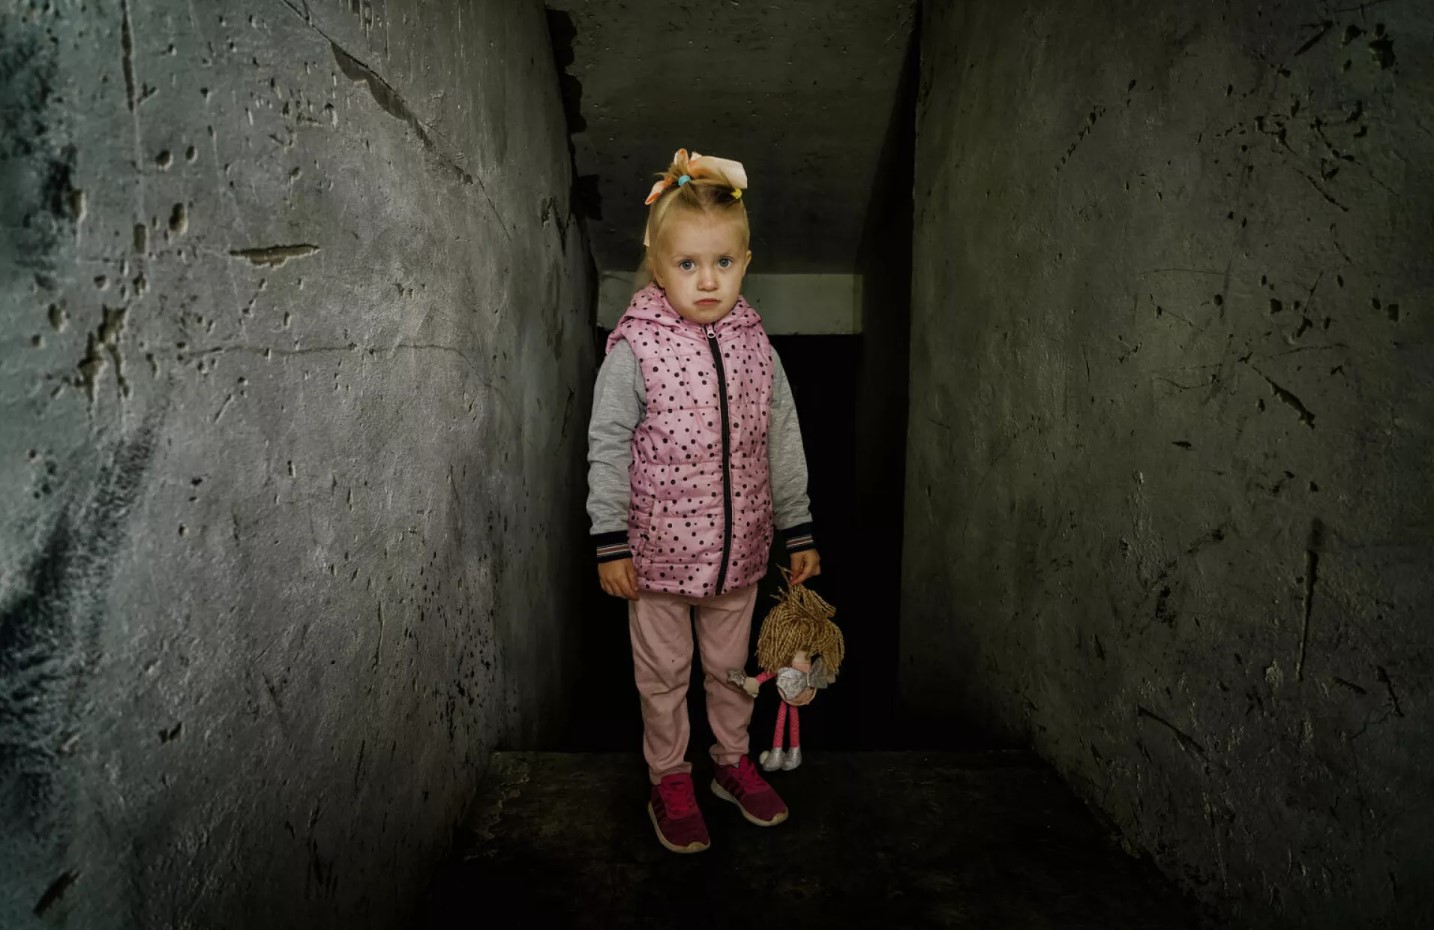 The Russian army killed 550 children in Ukraine